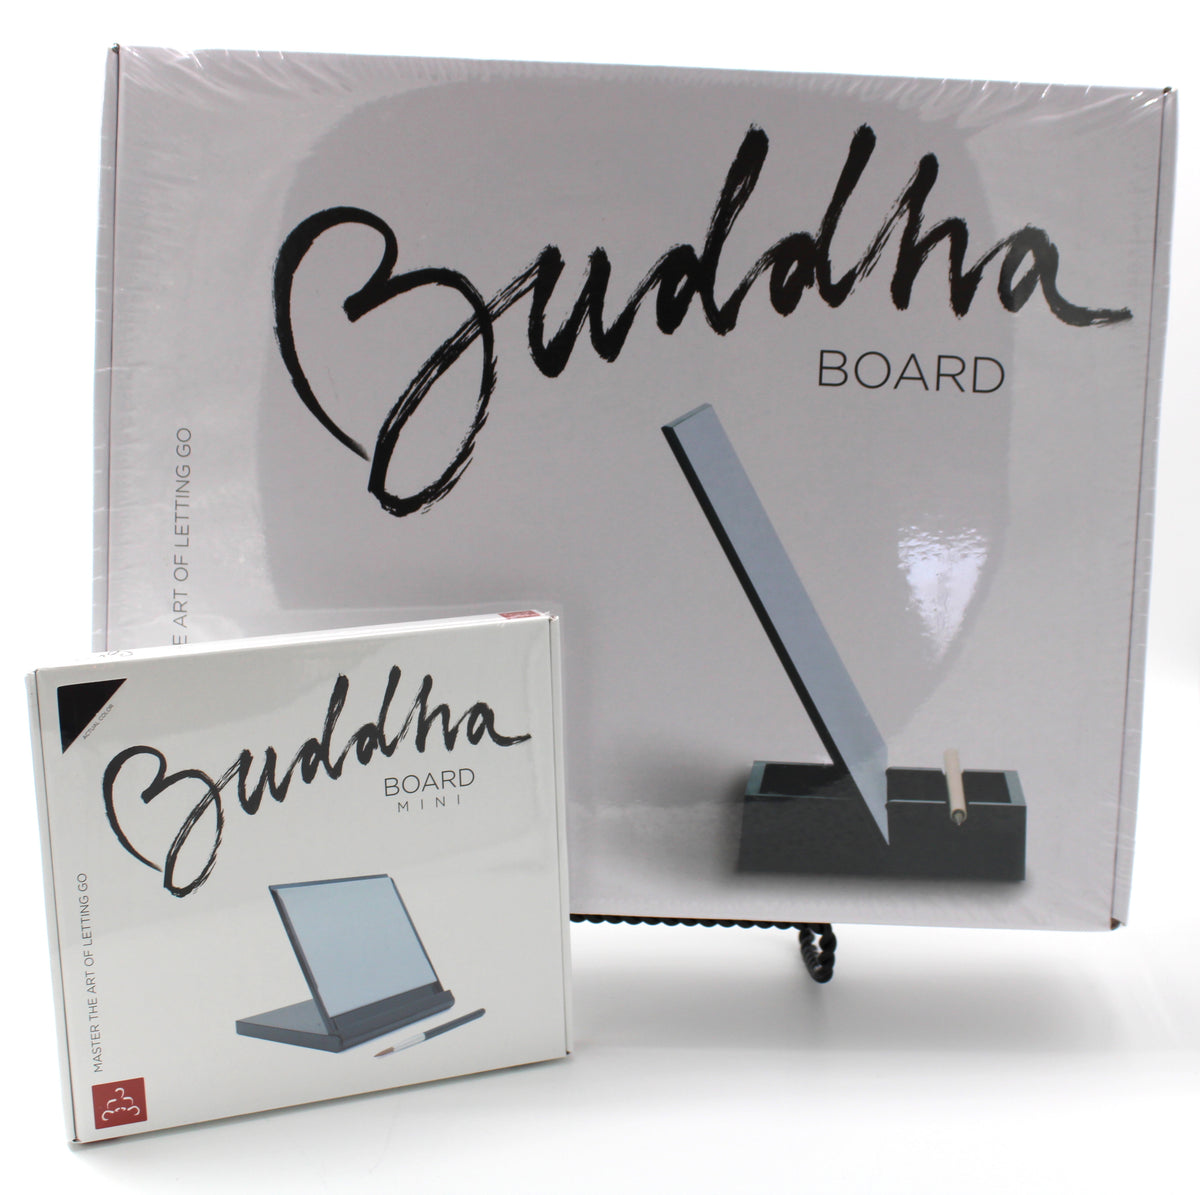 Keep Kids Calm With Mini Buddha Boards + a Giveaway